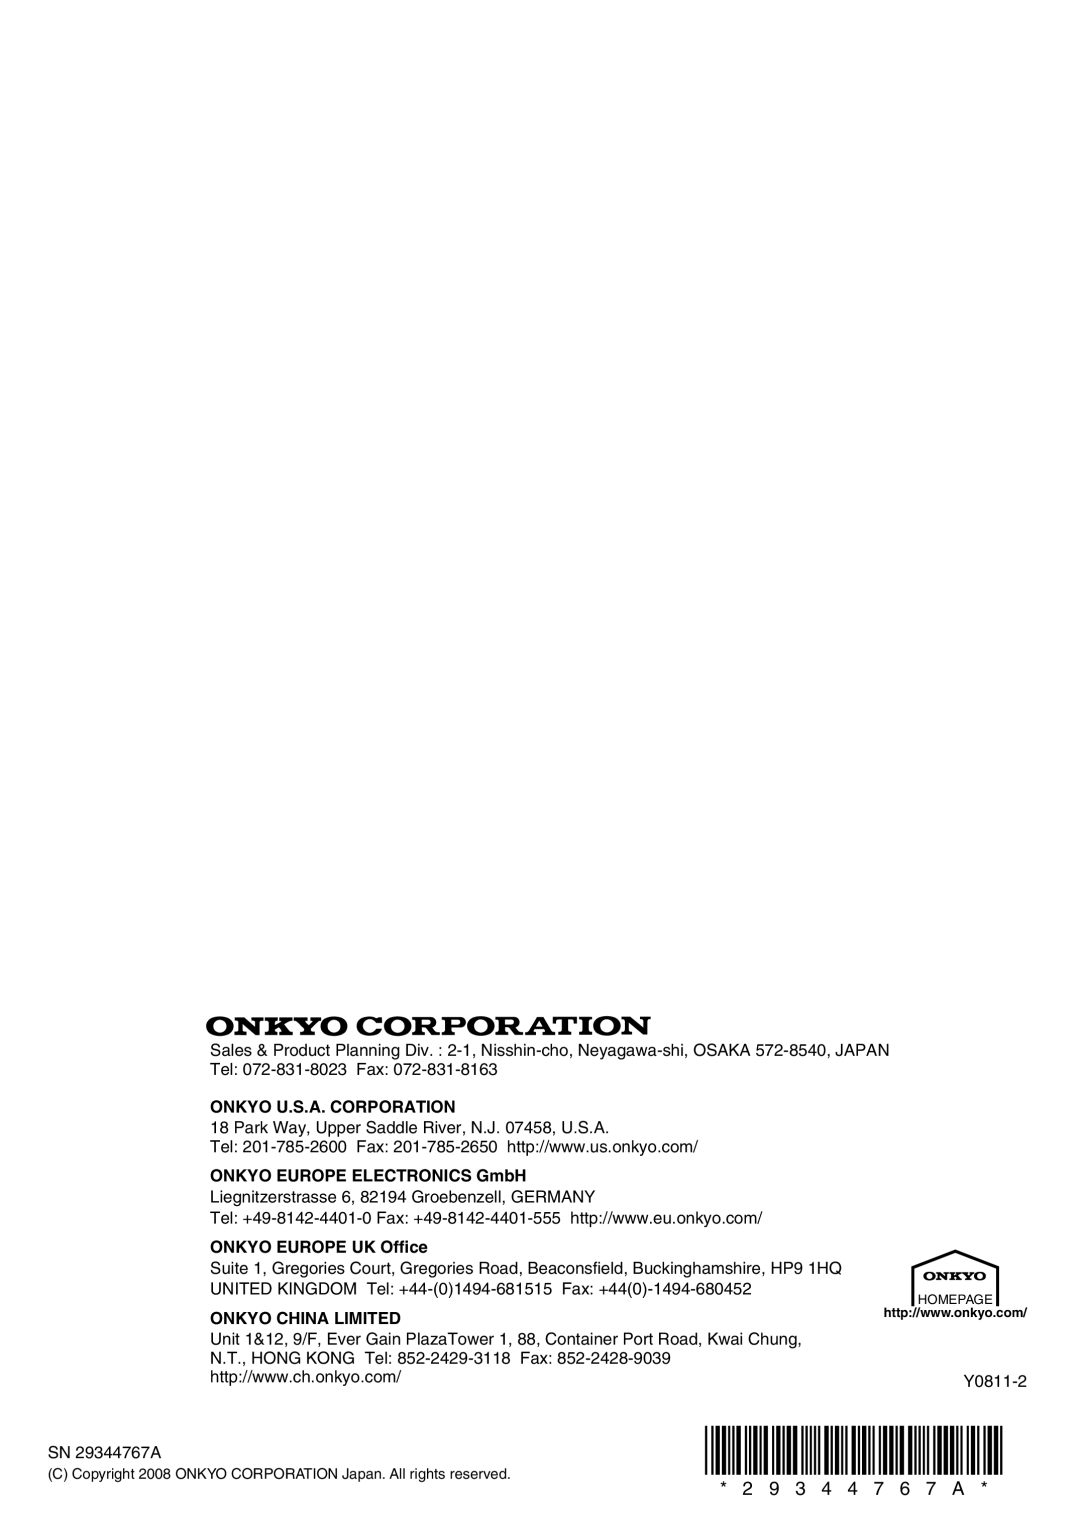 Onkyo PR-SC886 2 9 3 4 4 7 6 7 A, Onkyo U.S.A. Corporation, ONKYO EUROPE ELECTRONICS GmbH, ONKYO EUROPE UK Office 